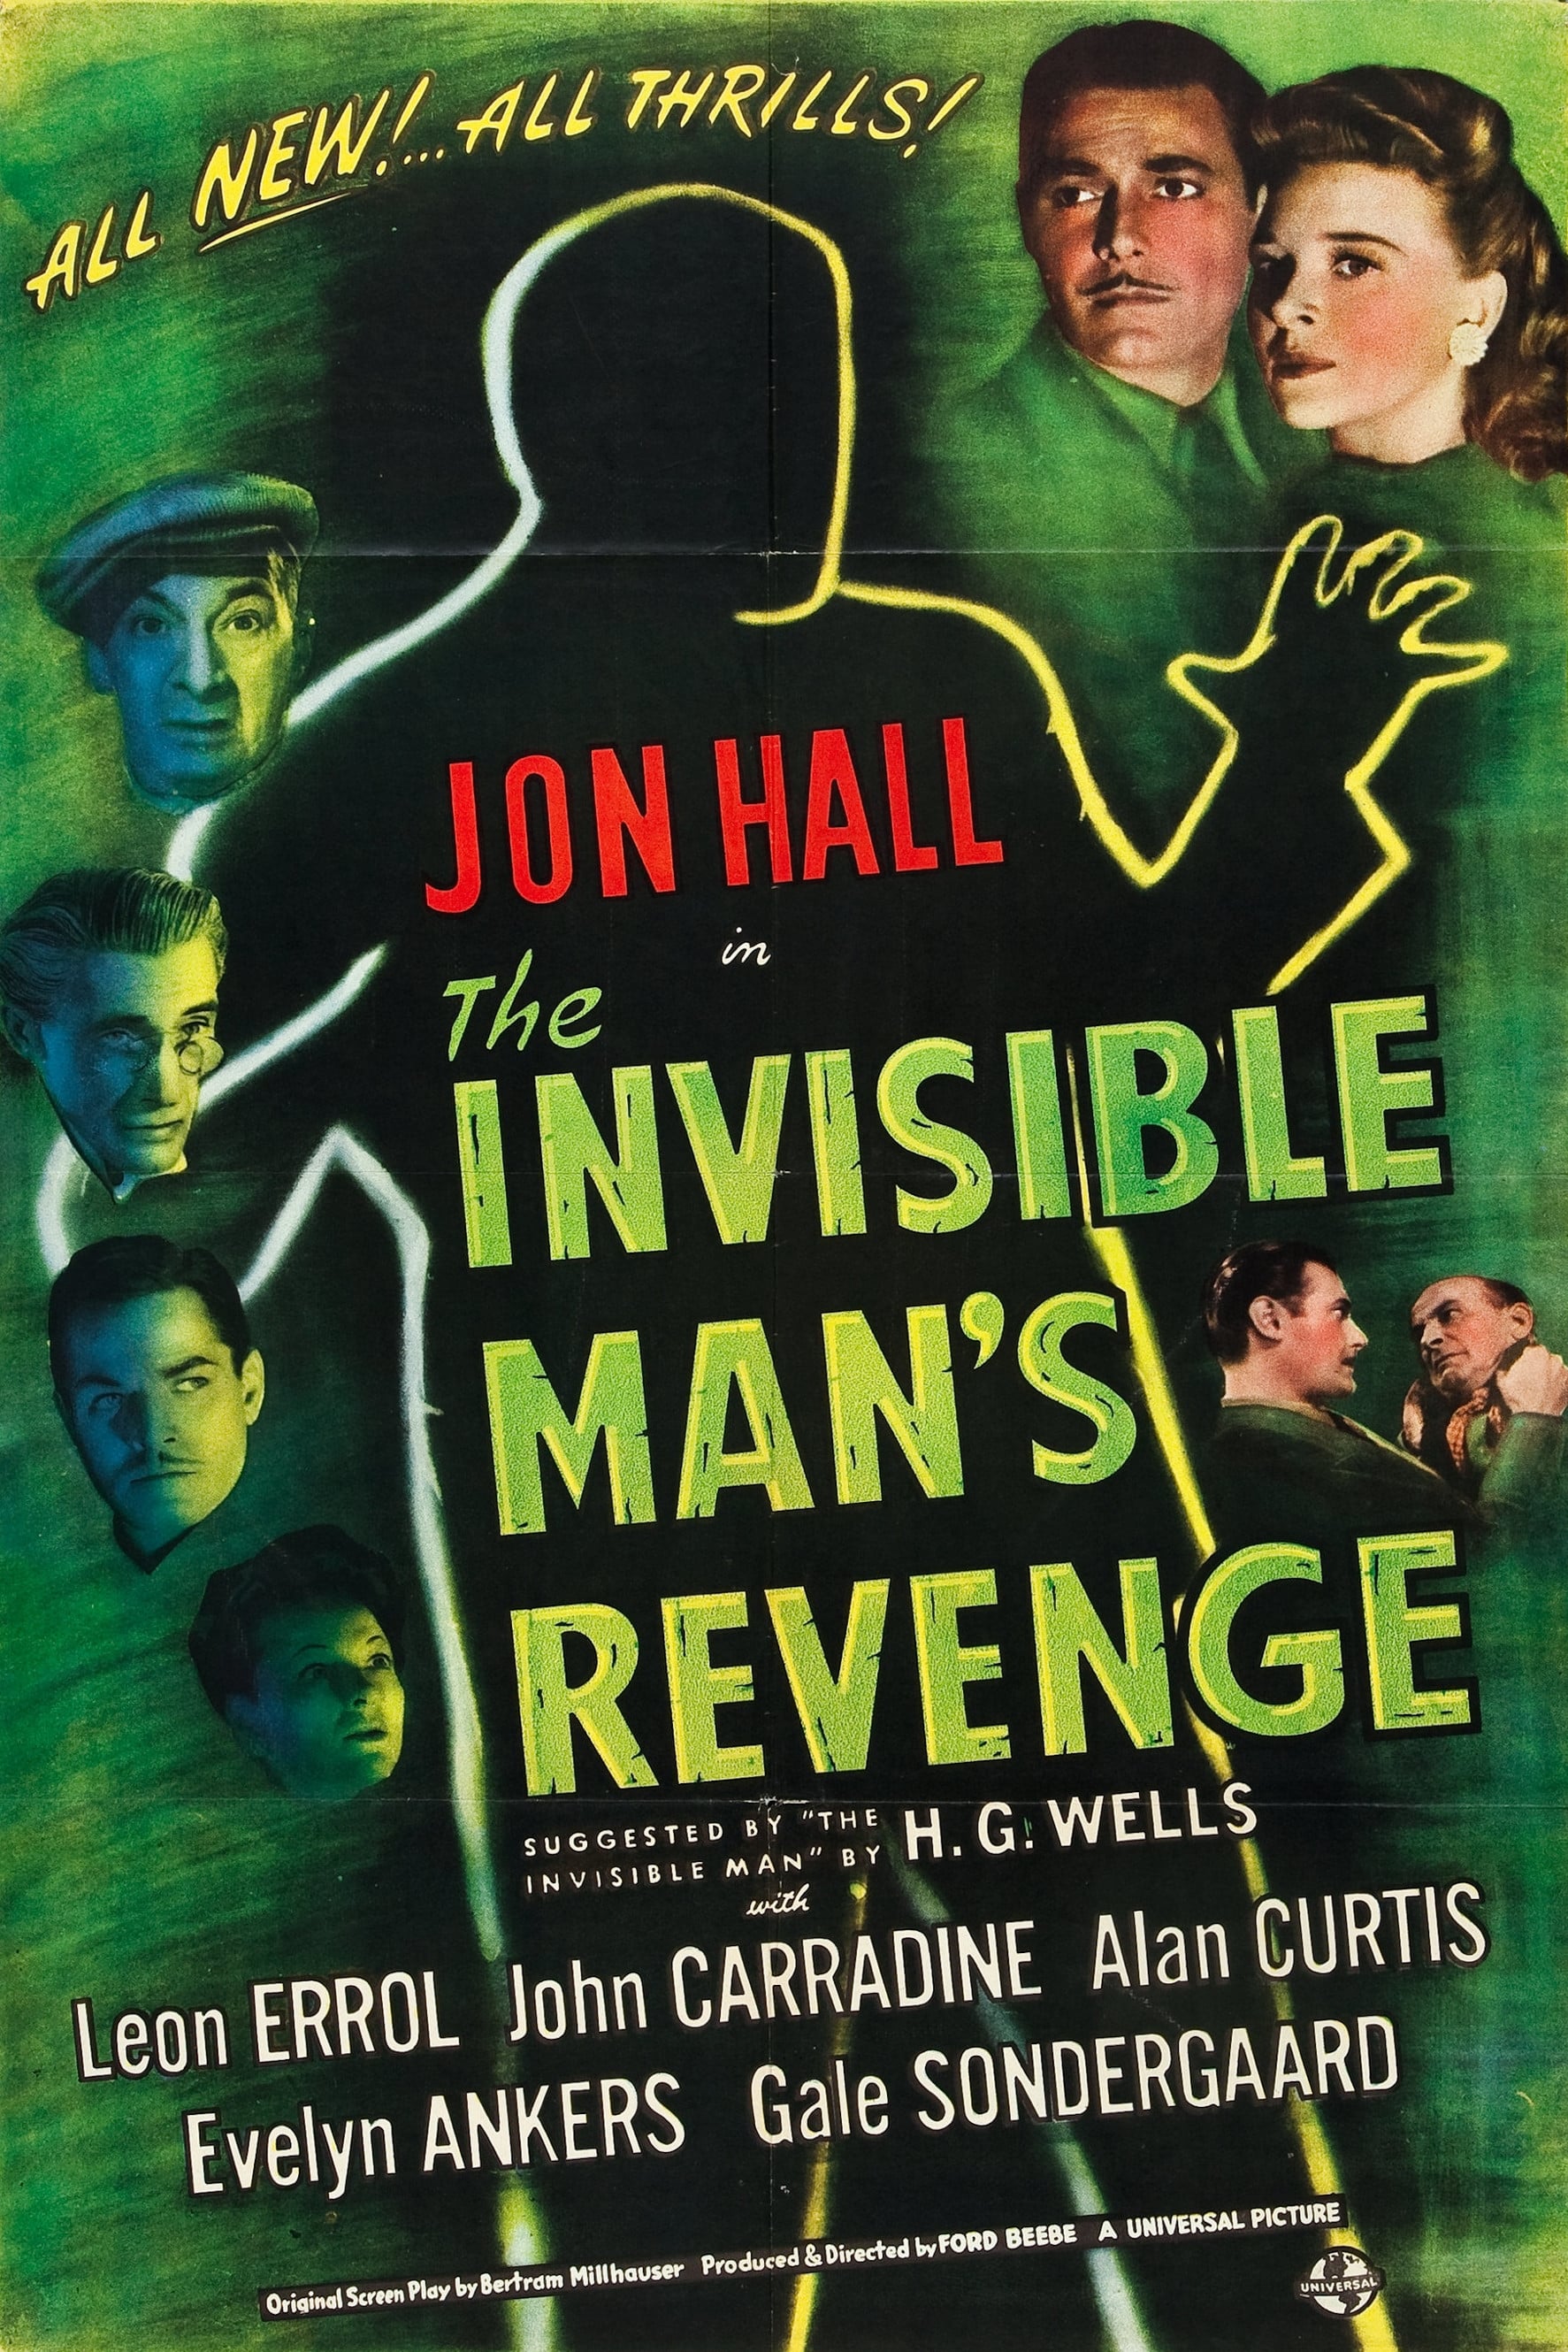 The Invisible Man's Revenge - The Invisible Man's Revenge